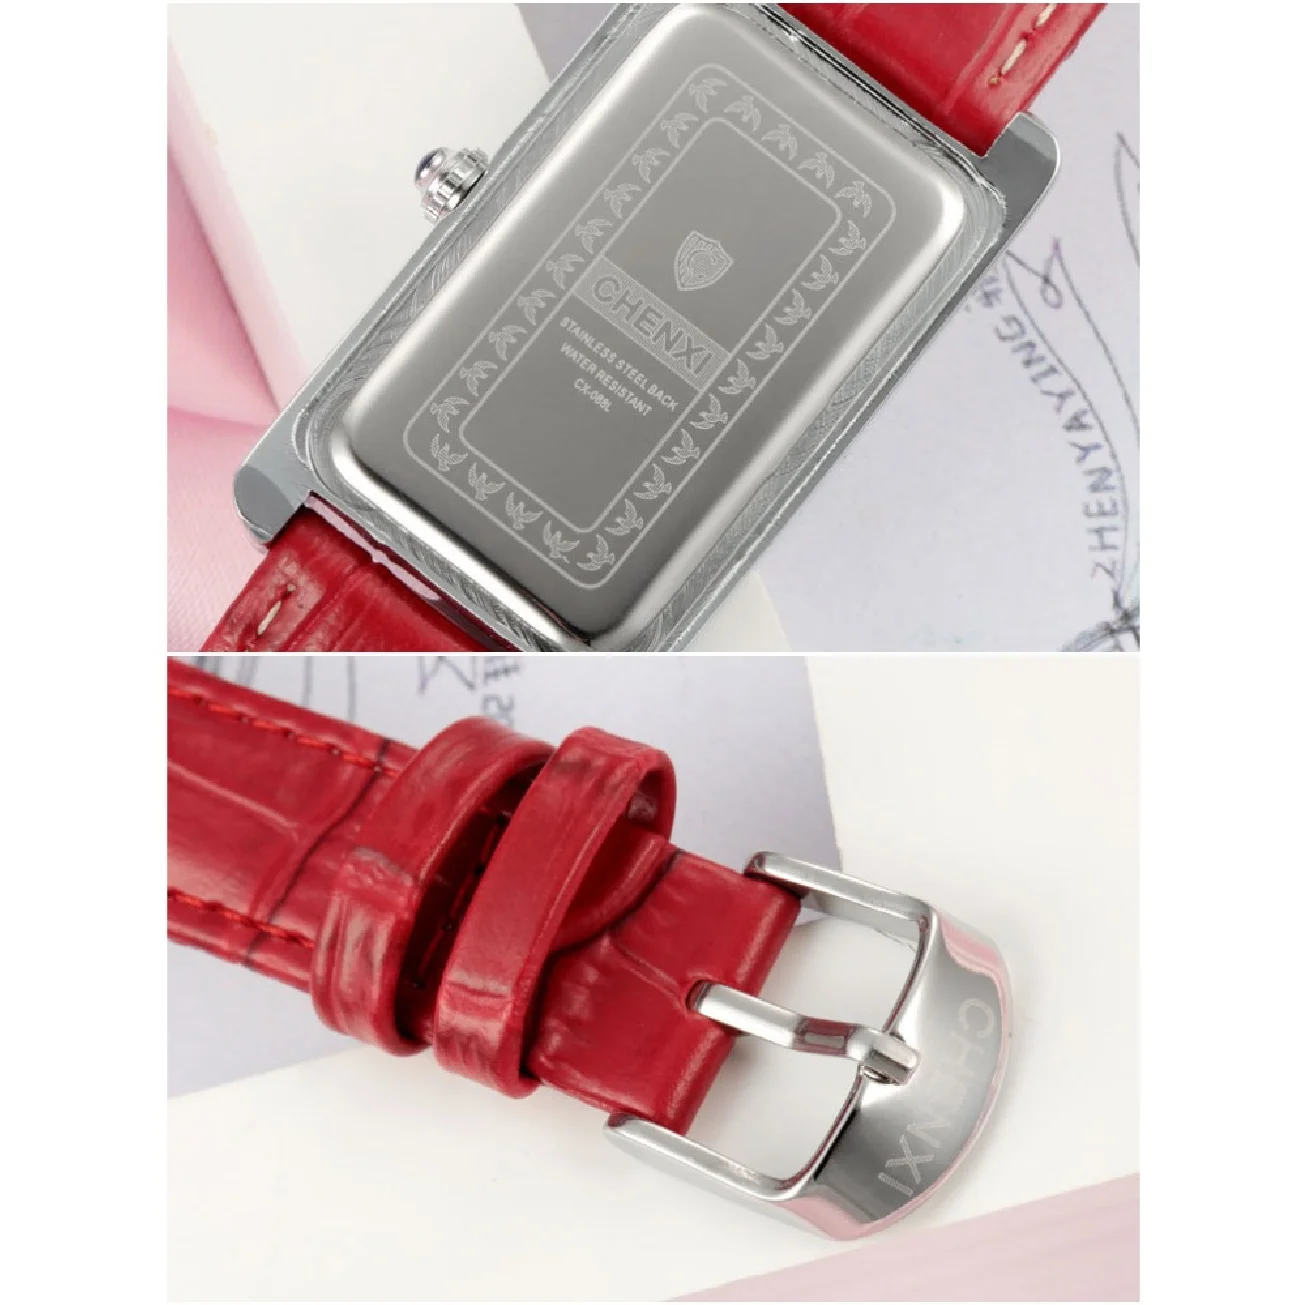 CHENXI Women's Red Leather Watches Women Fashion Simple Luxury Brand Analog Quartz Watch Ladies Small Fresh Classic Wristwatches enlarge